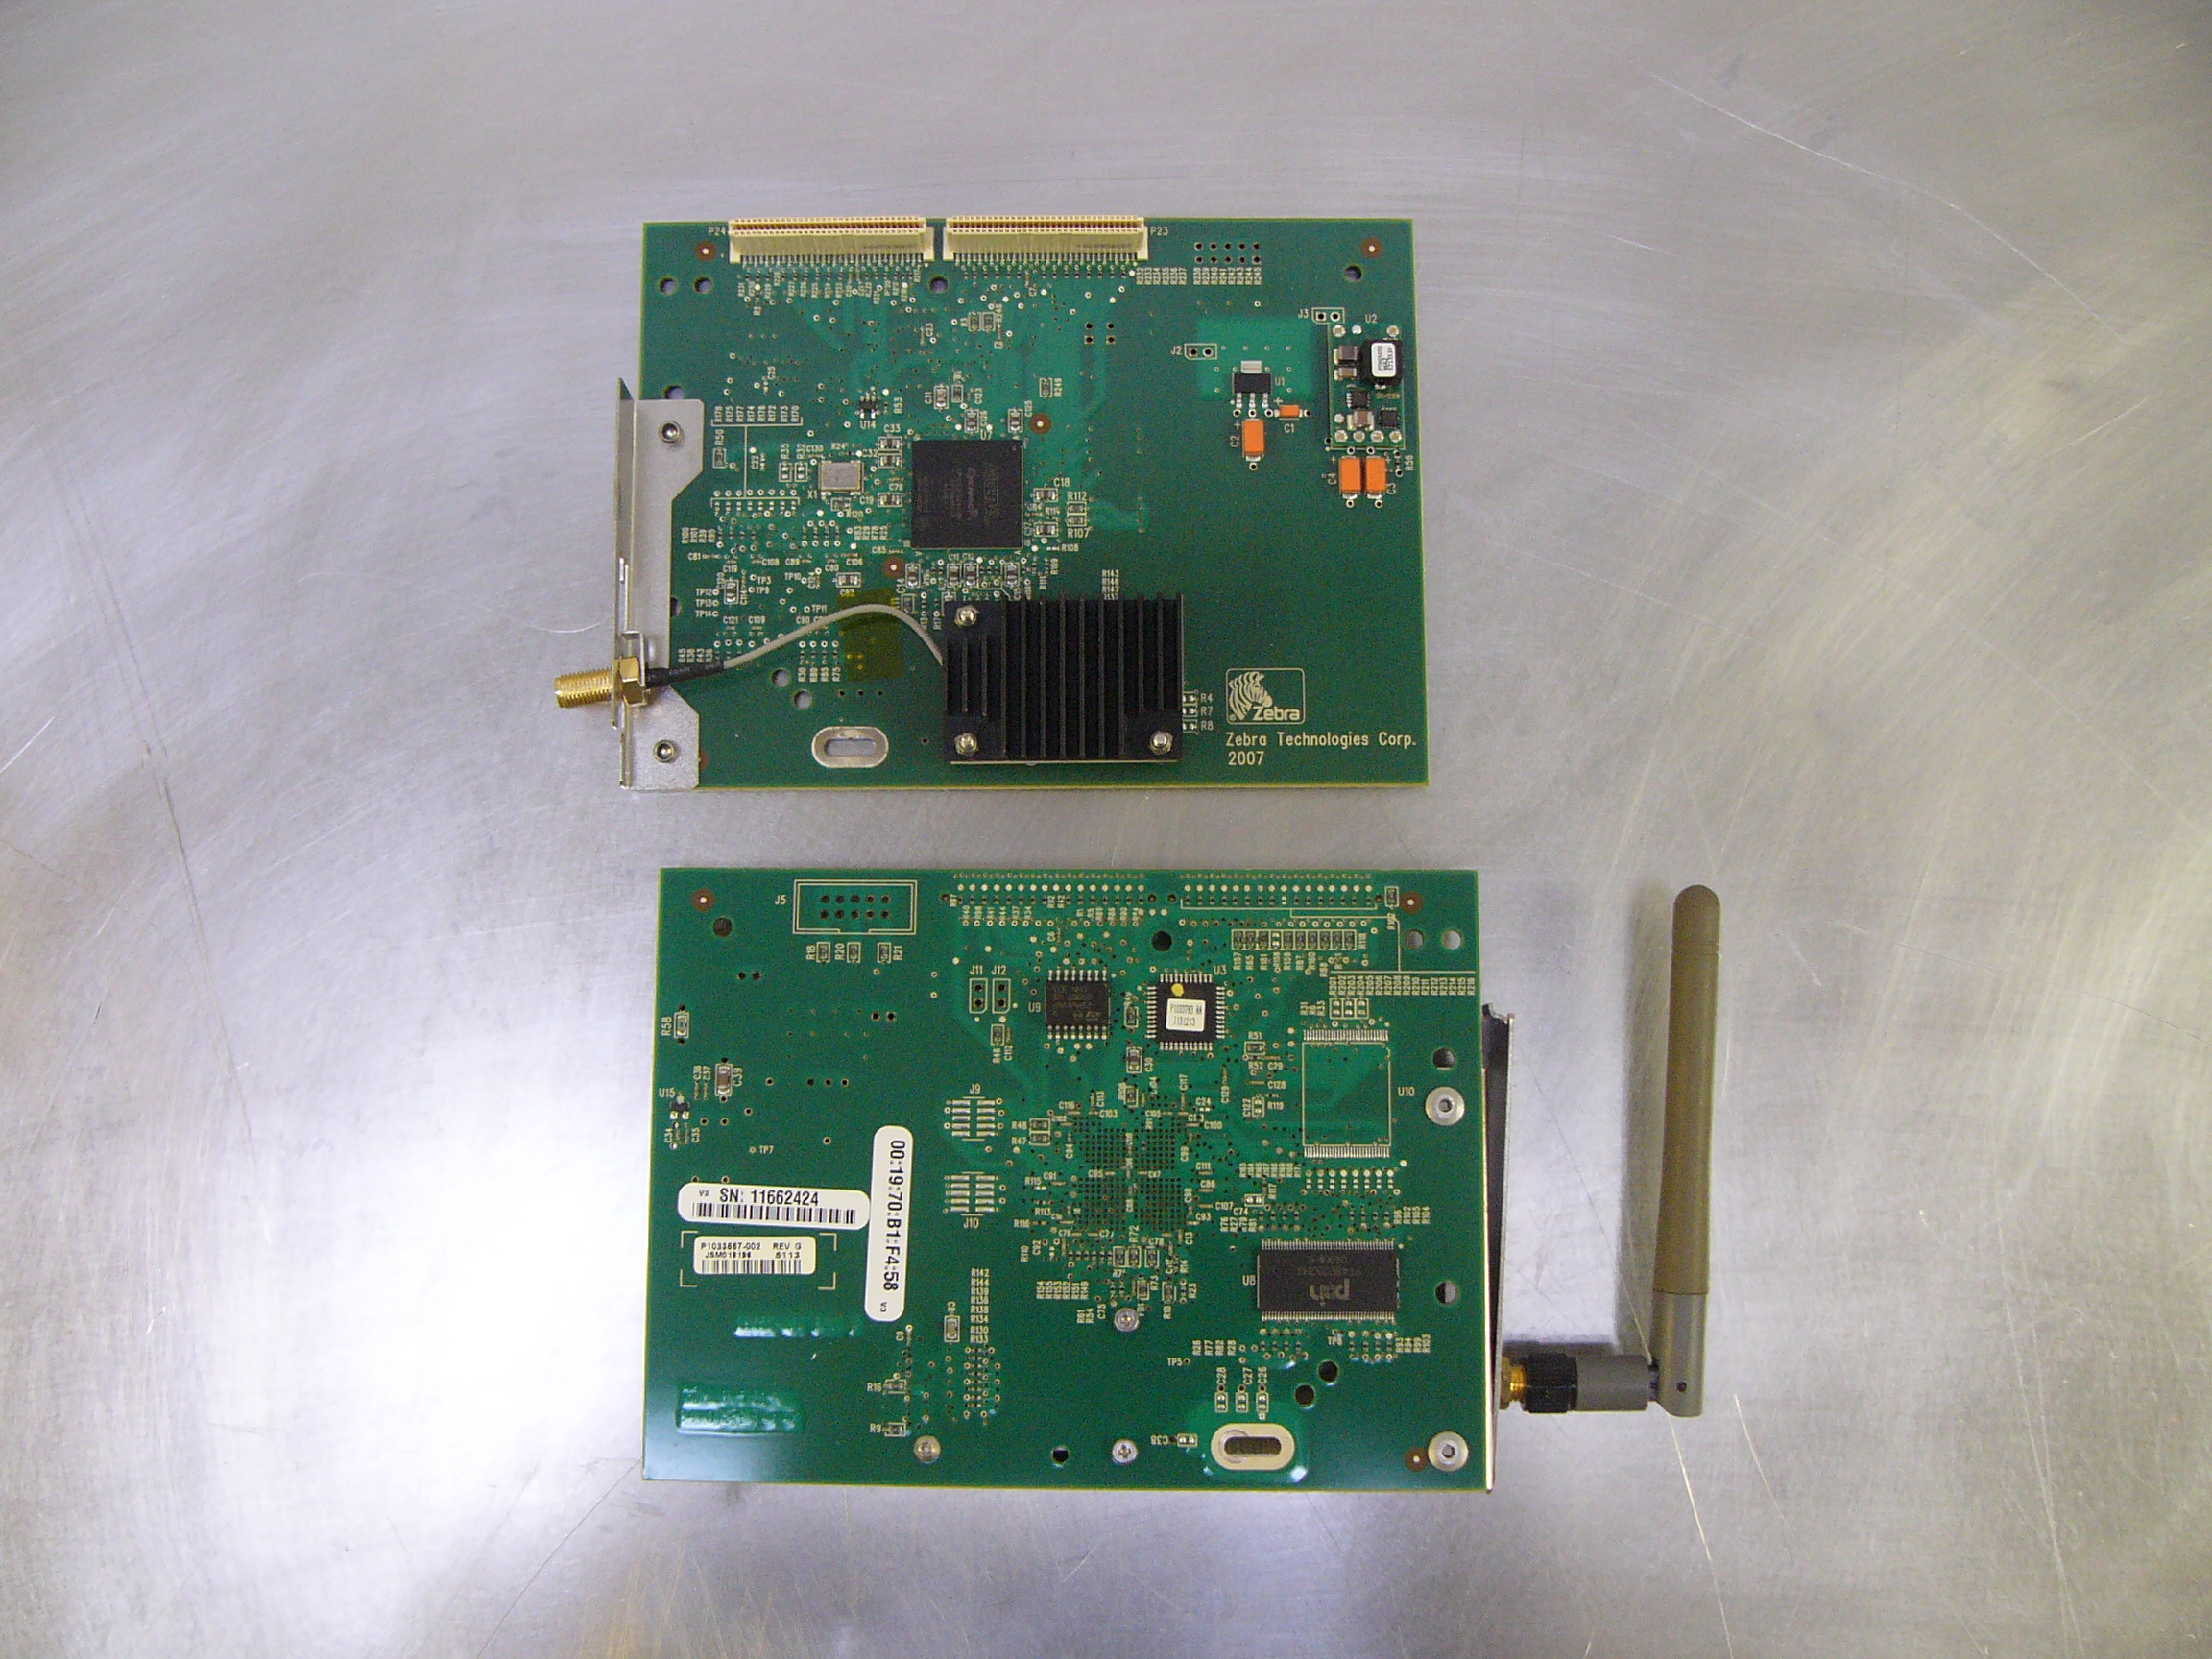 P1033557-002 -  - ZebraNet Internal Wireless b/g Print Server, Zebra Xi4 Series and 105SLplus